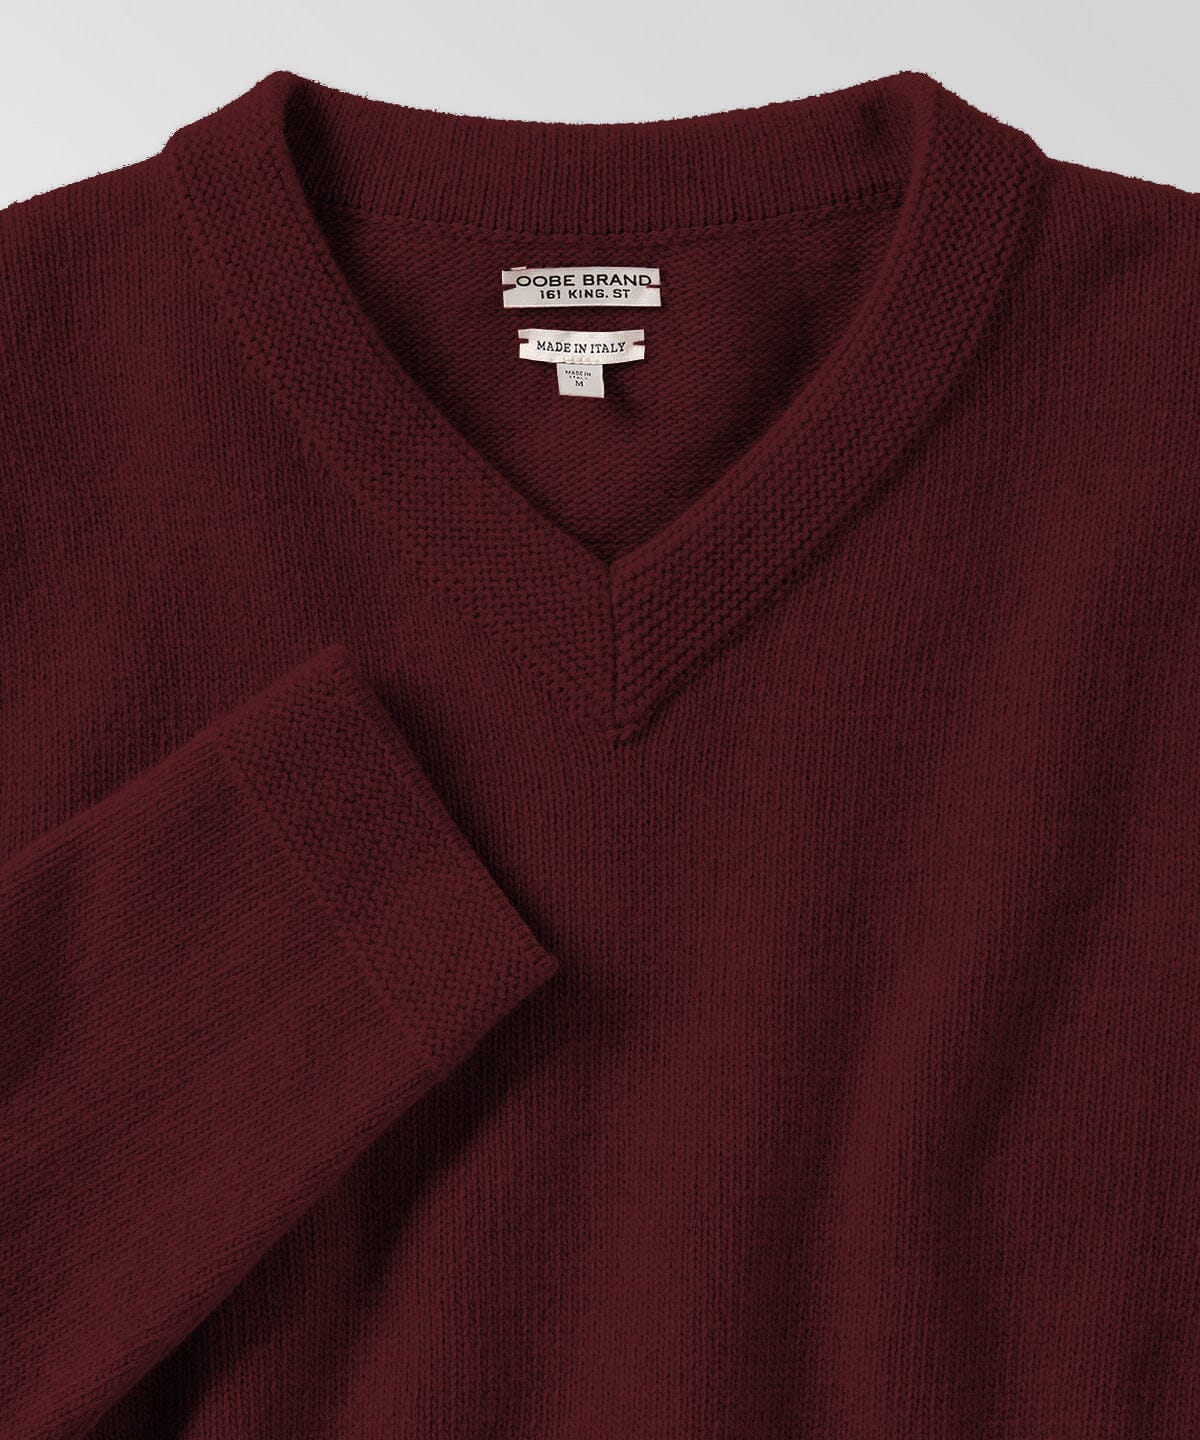 Heron V-Neck Sweater Sweaters OOBE BRAND 